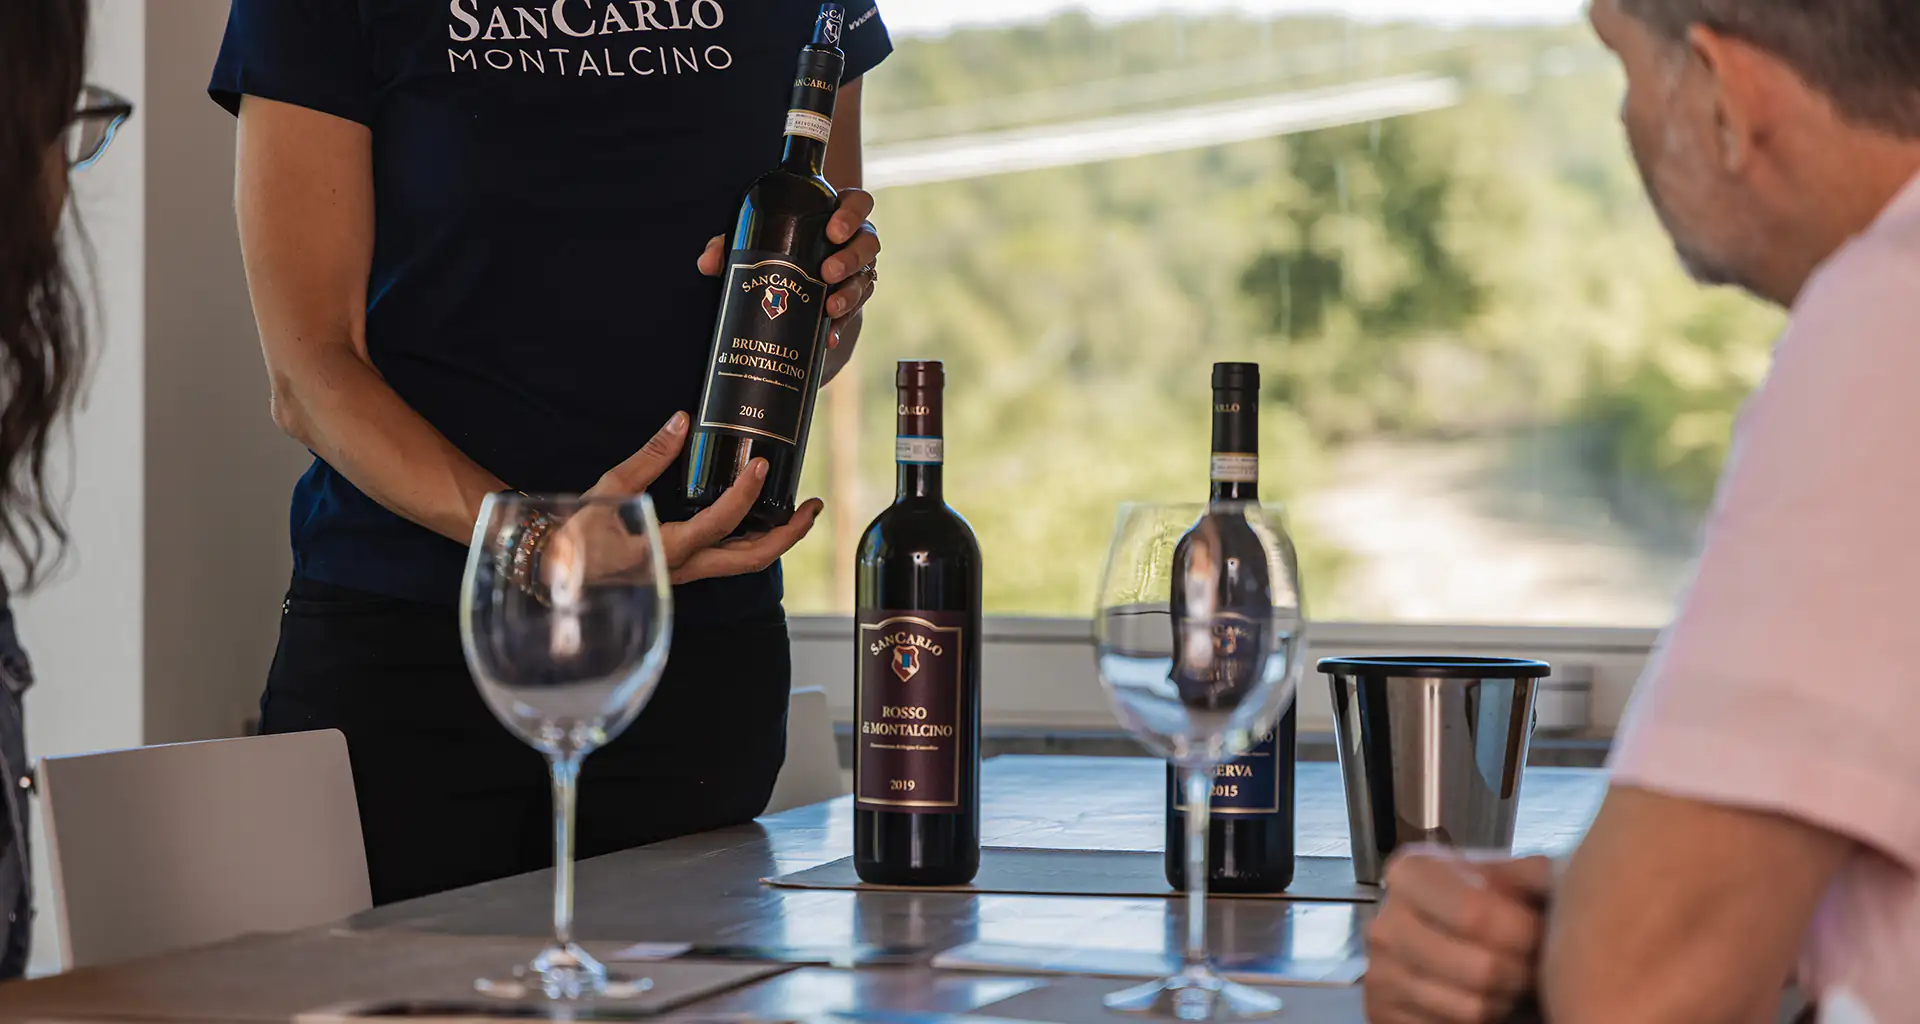 Degustazione Vini SanCarlo Montalcino